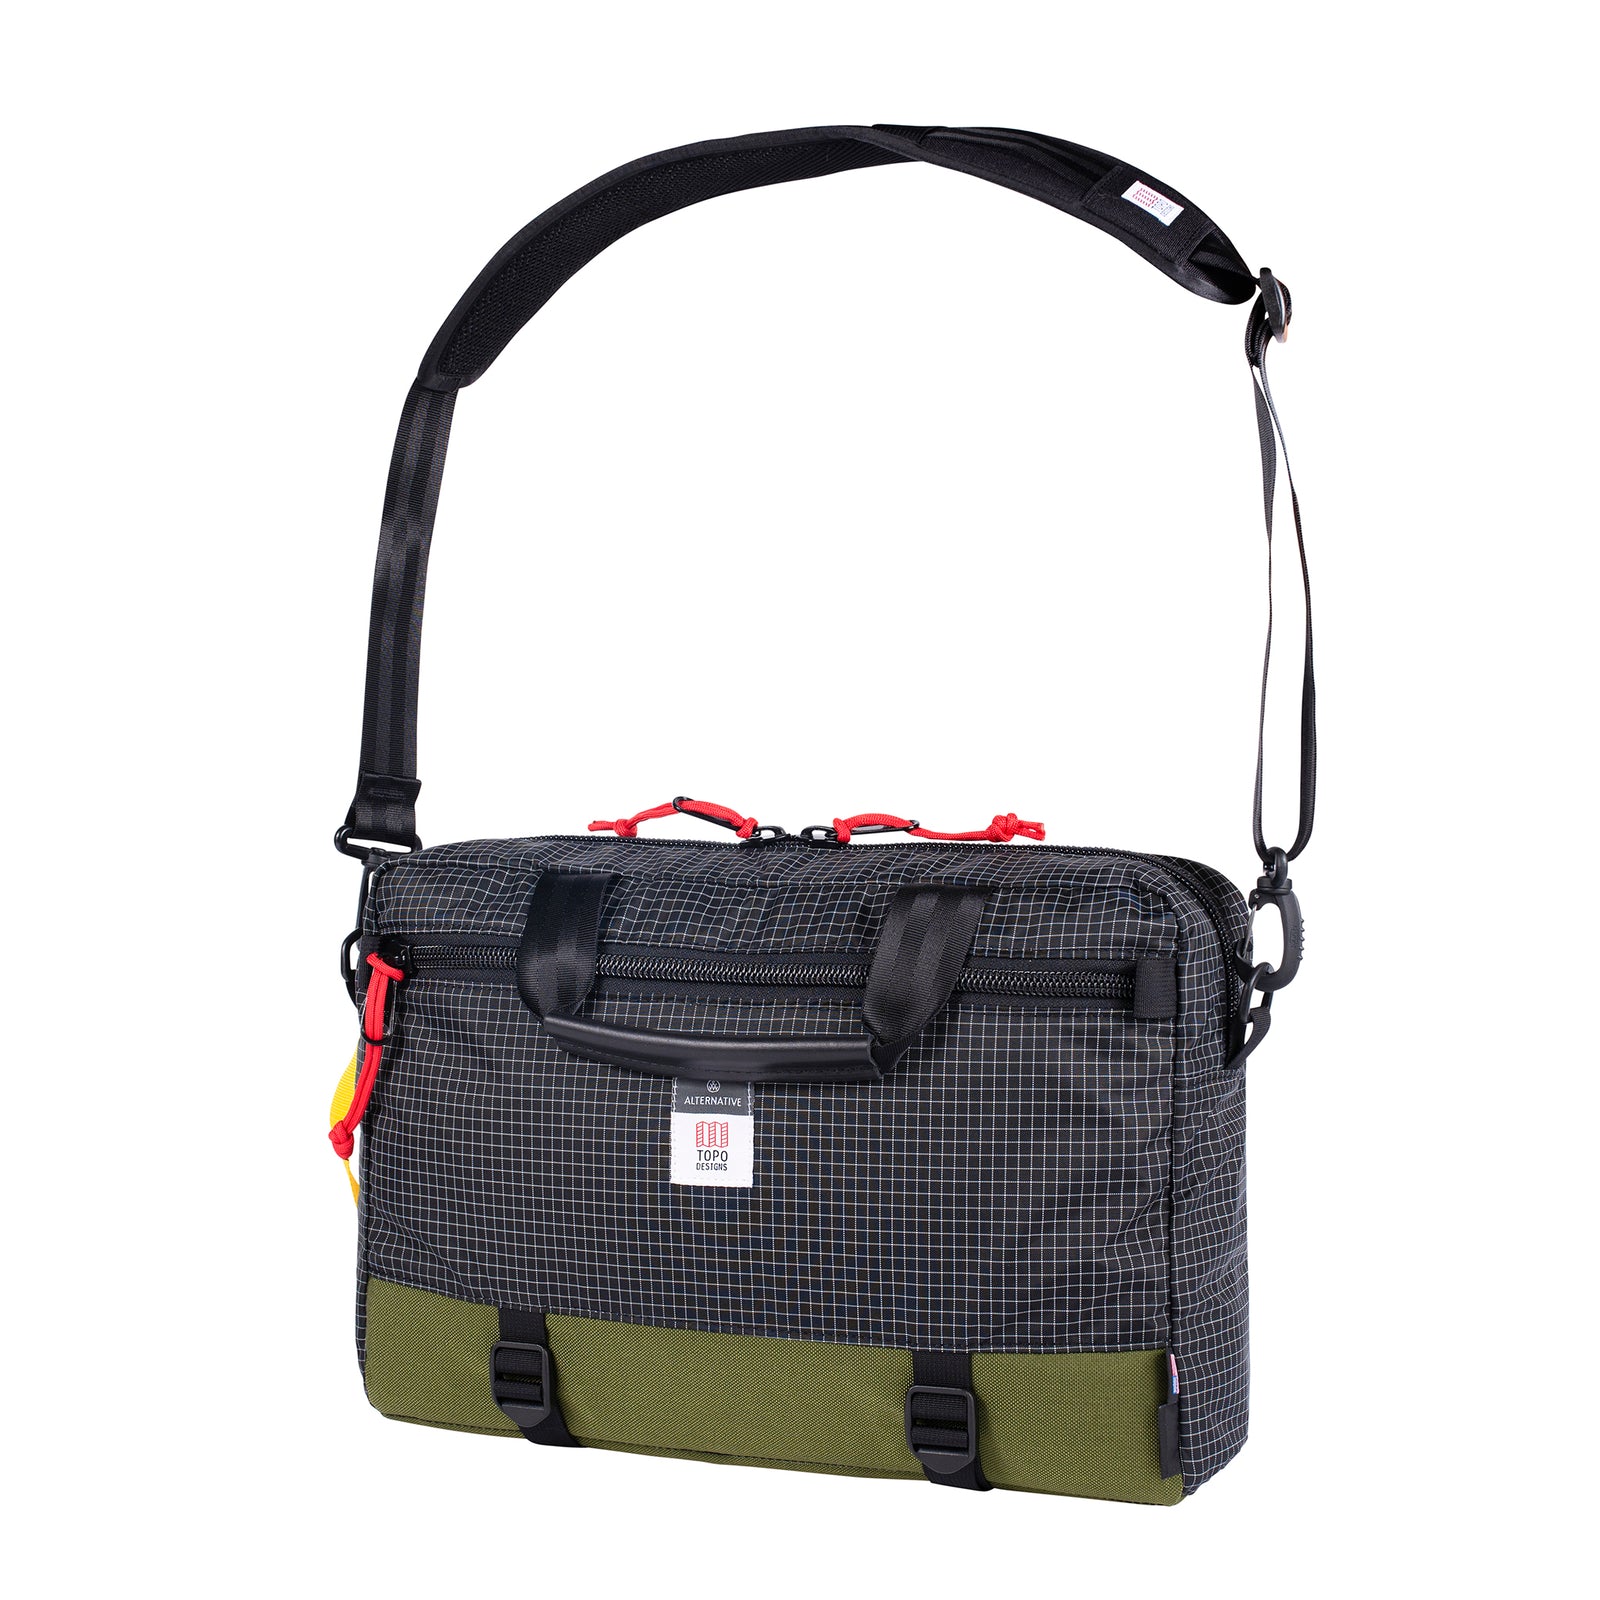 Detail shot of Topo Designs x Alternative Commuter Briefcase in olive/black showing shoulder strap